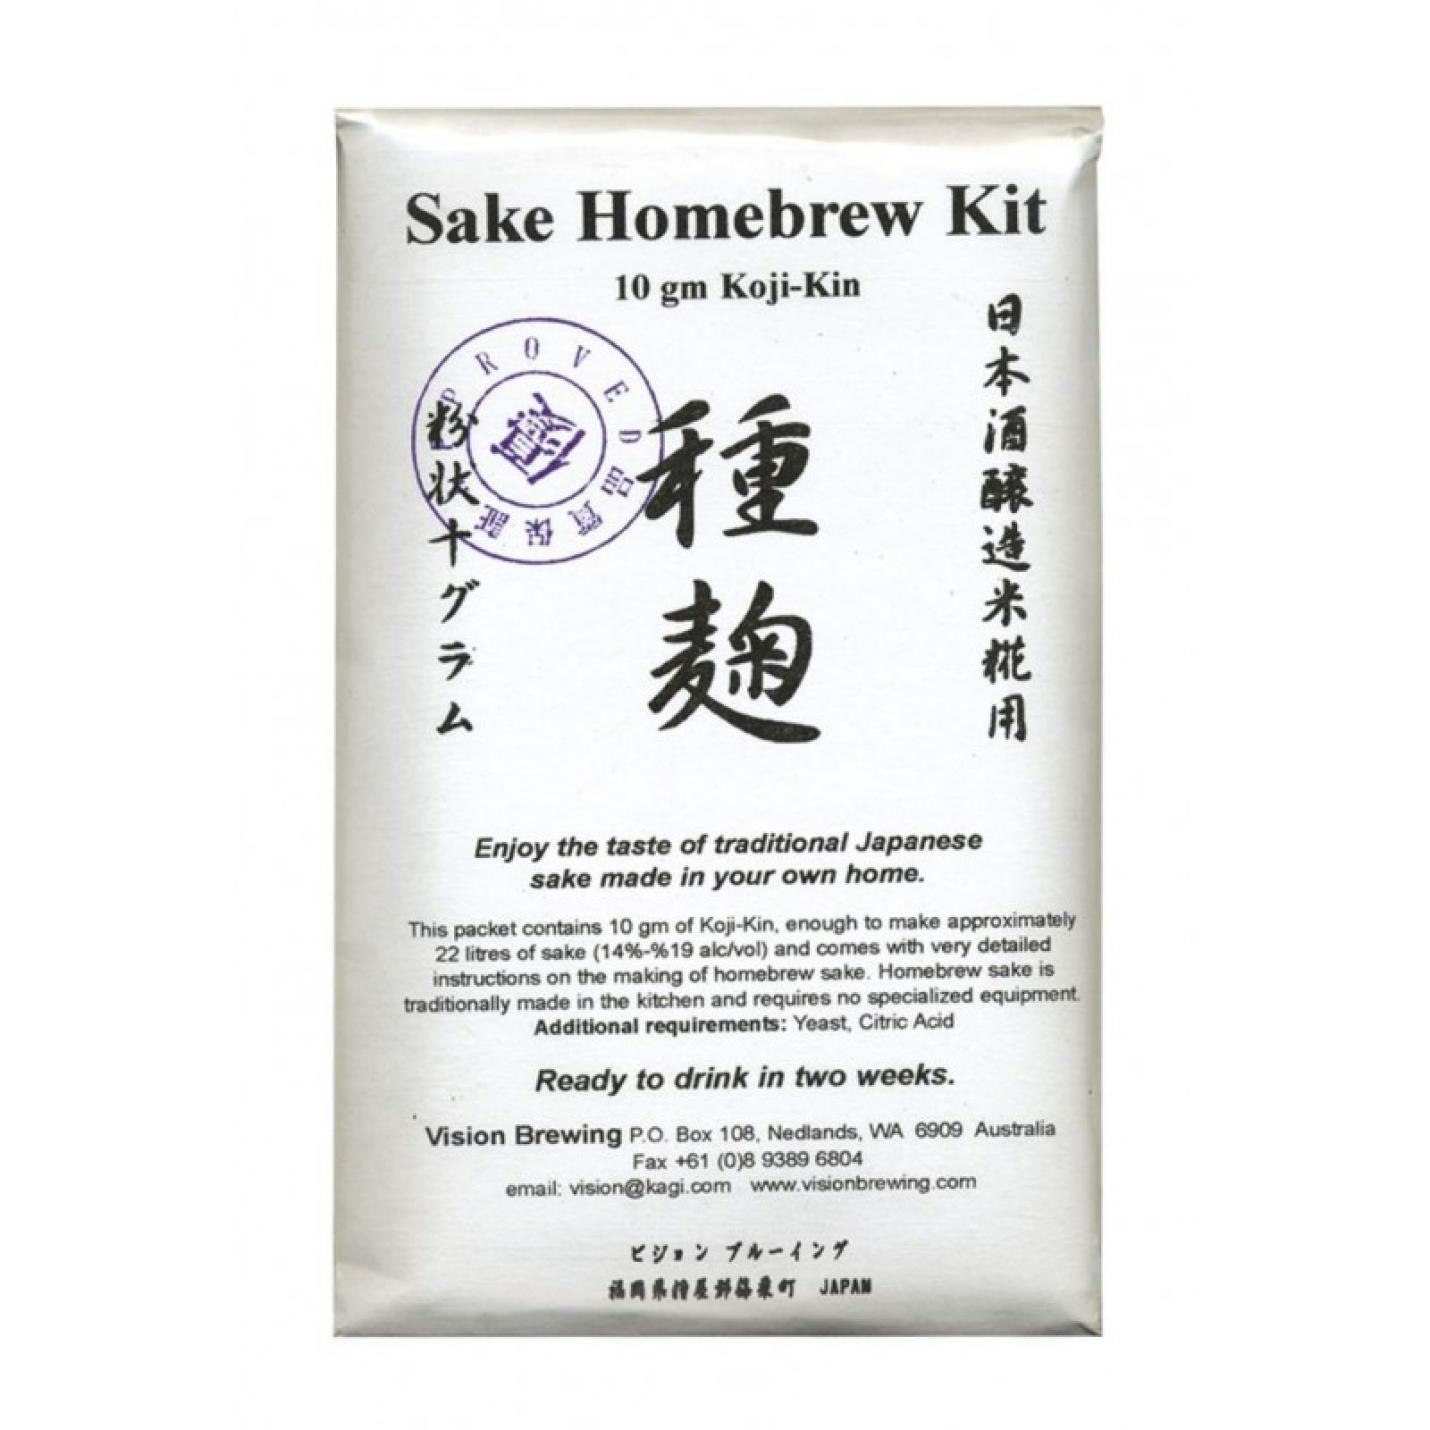 Koji-Kin 10 Gram (voor 6 Kg Rijst - 22 L Sake) tht 15-08-22